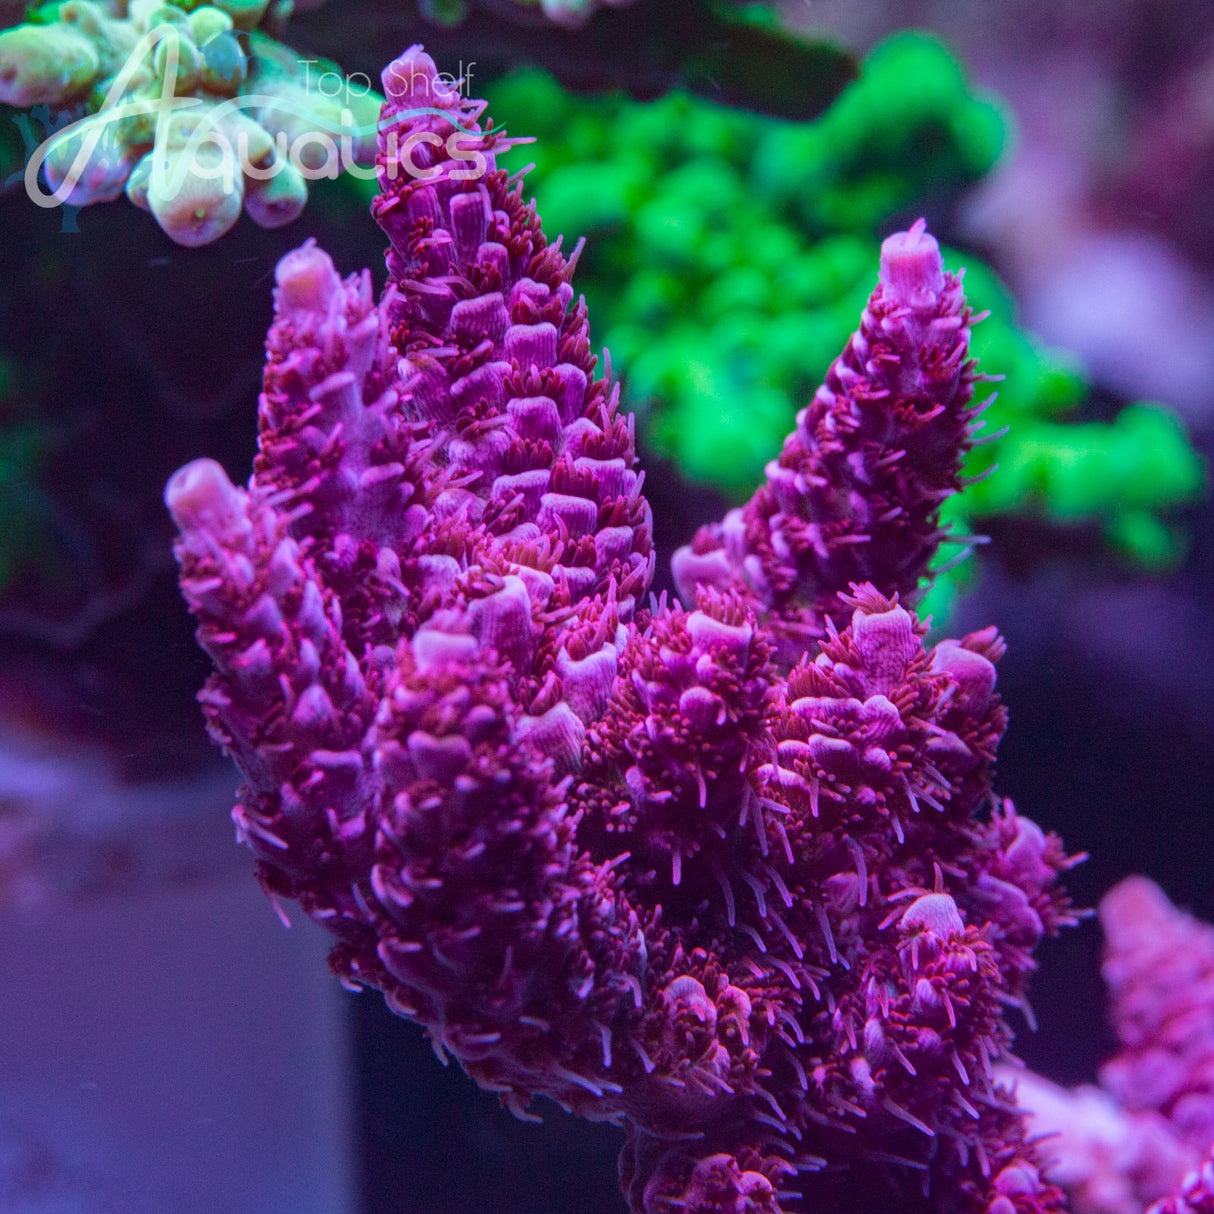 WWC Christmas Mirabilis Acropora Coral - Top Shelf Aquatics